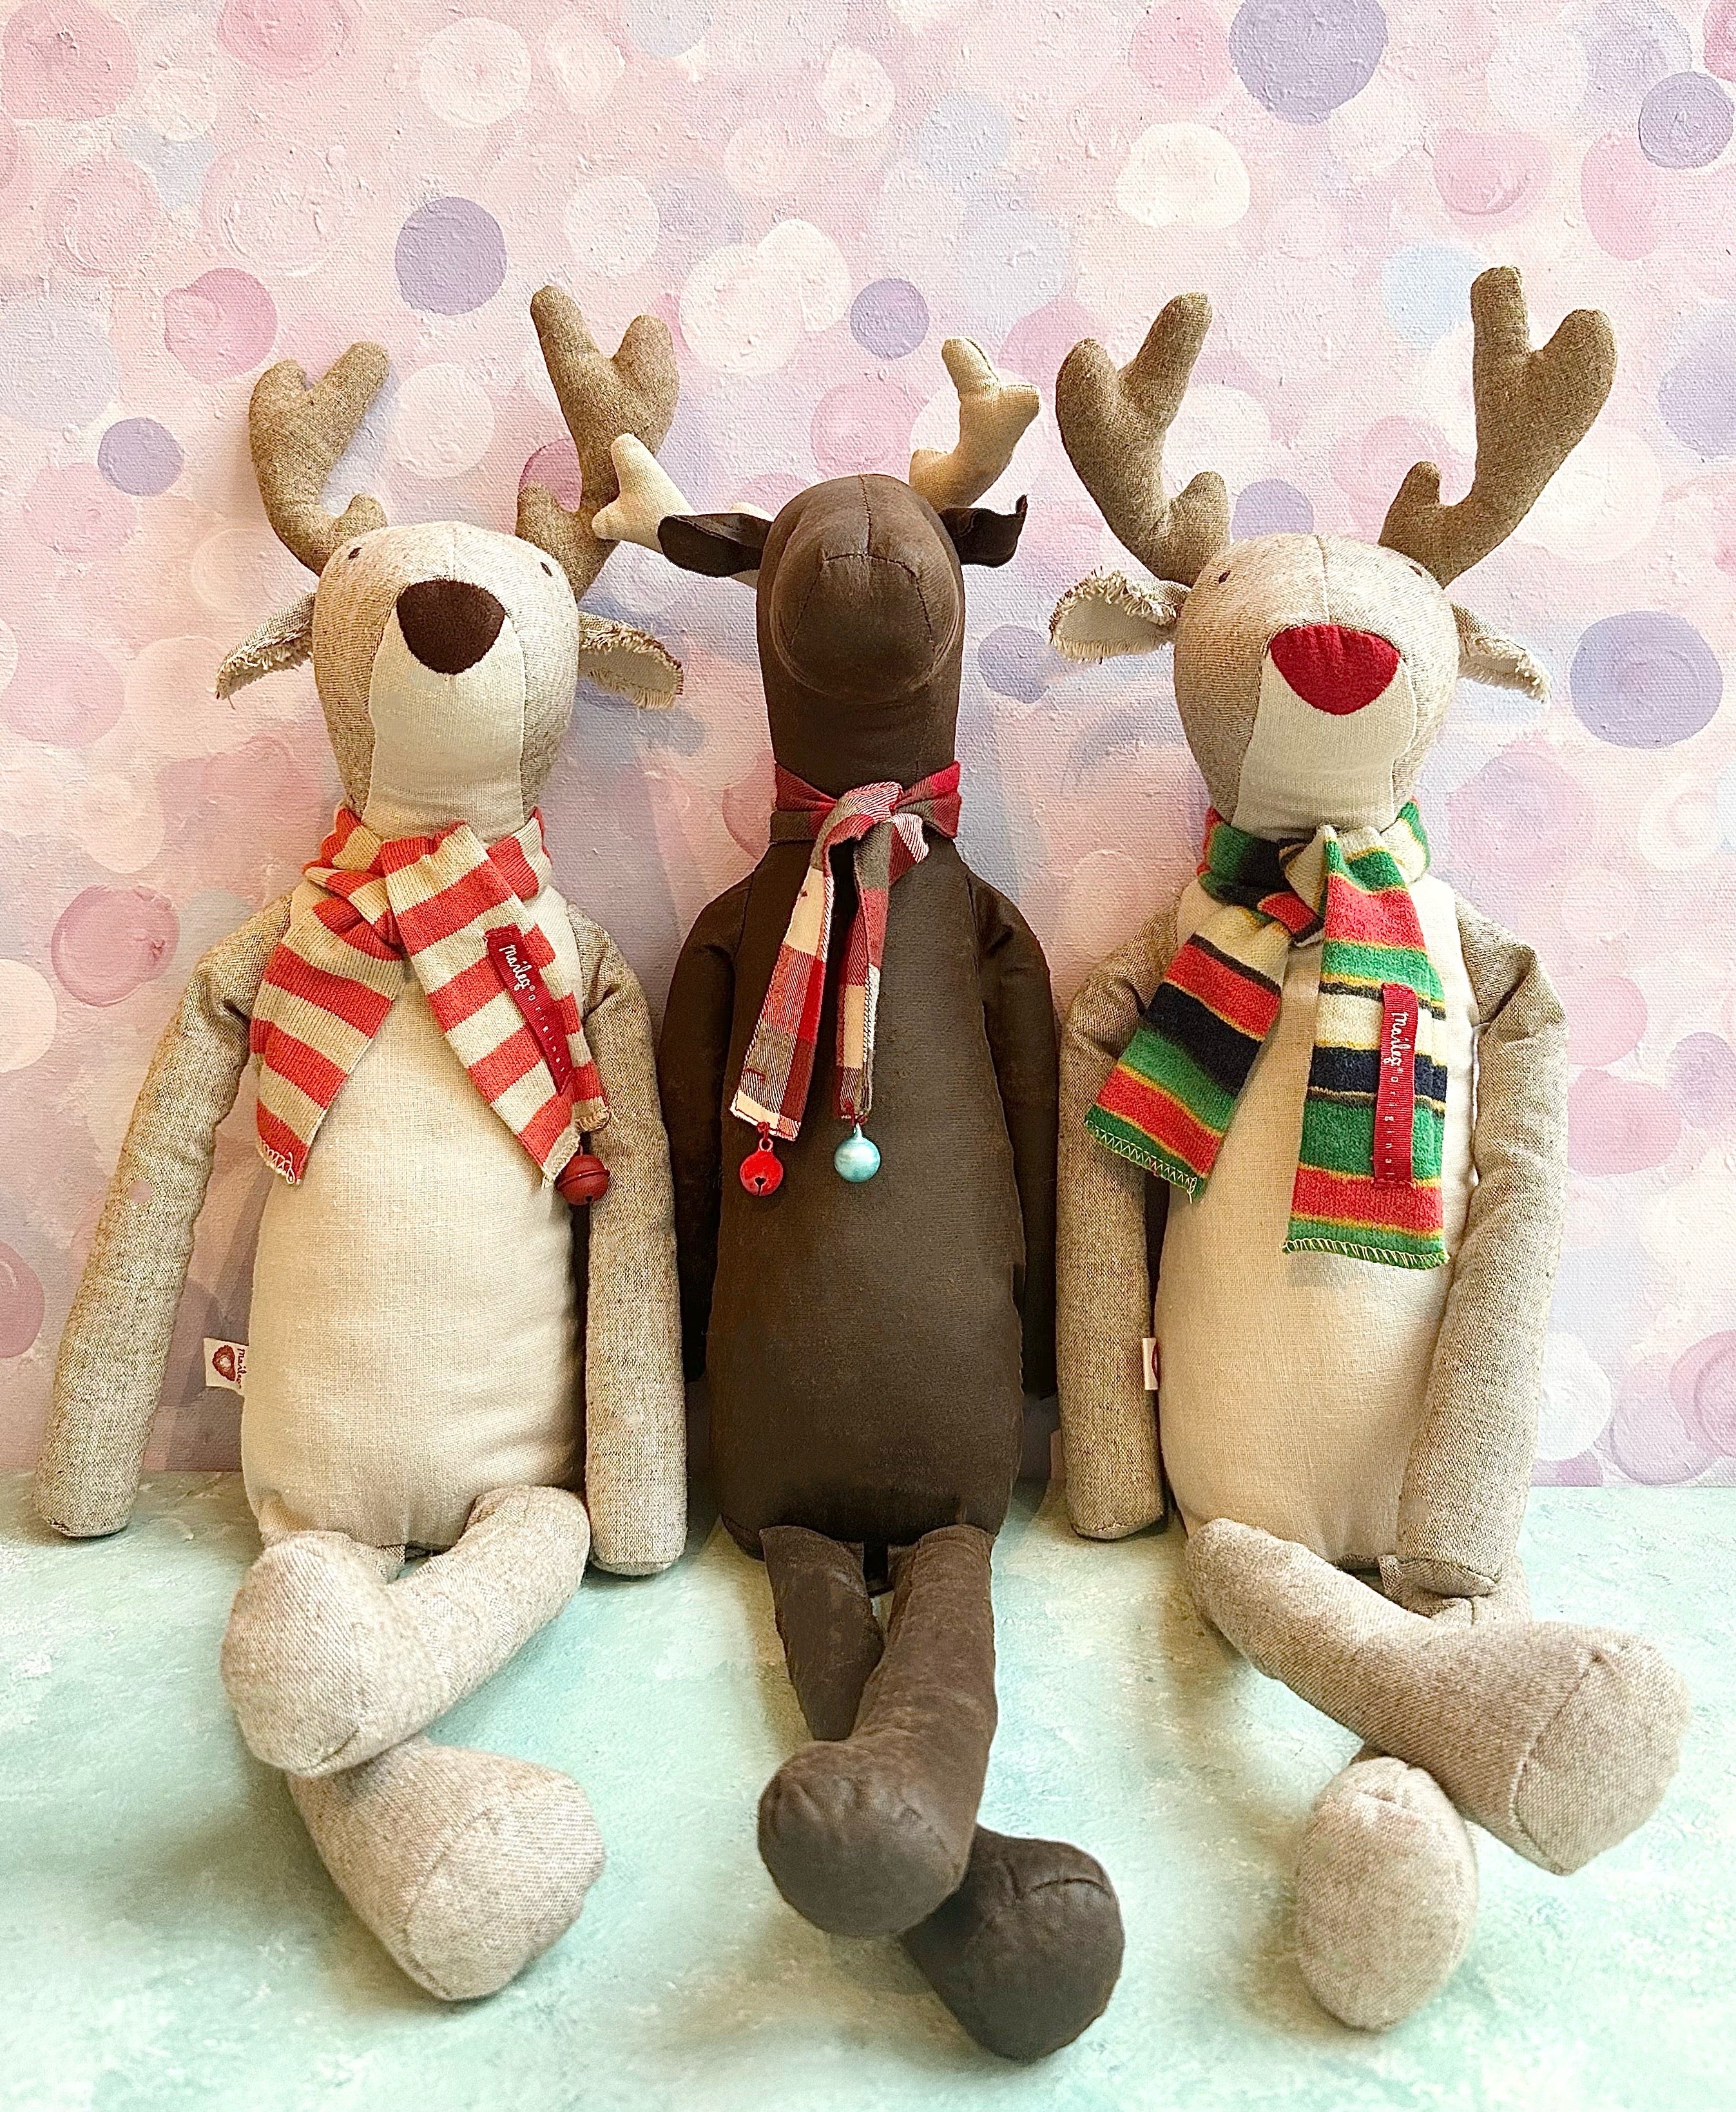 Reindeer Rudolph - 2013